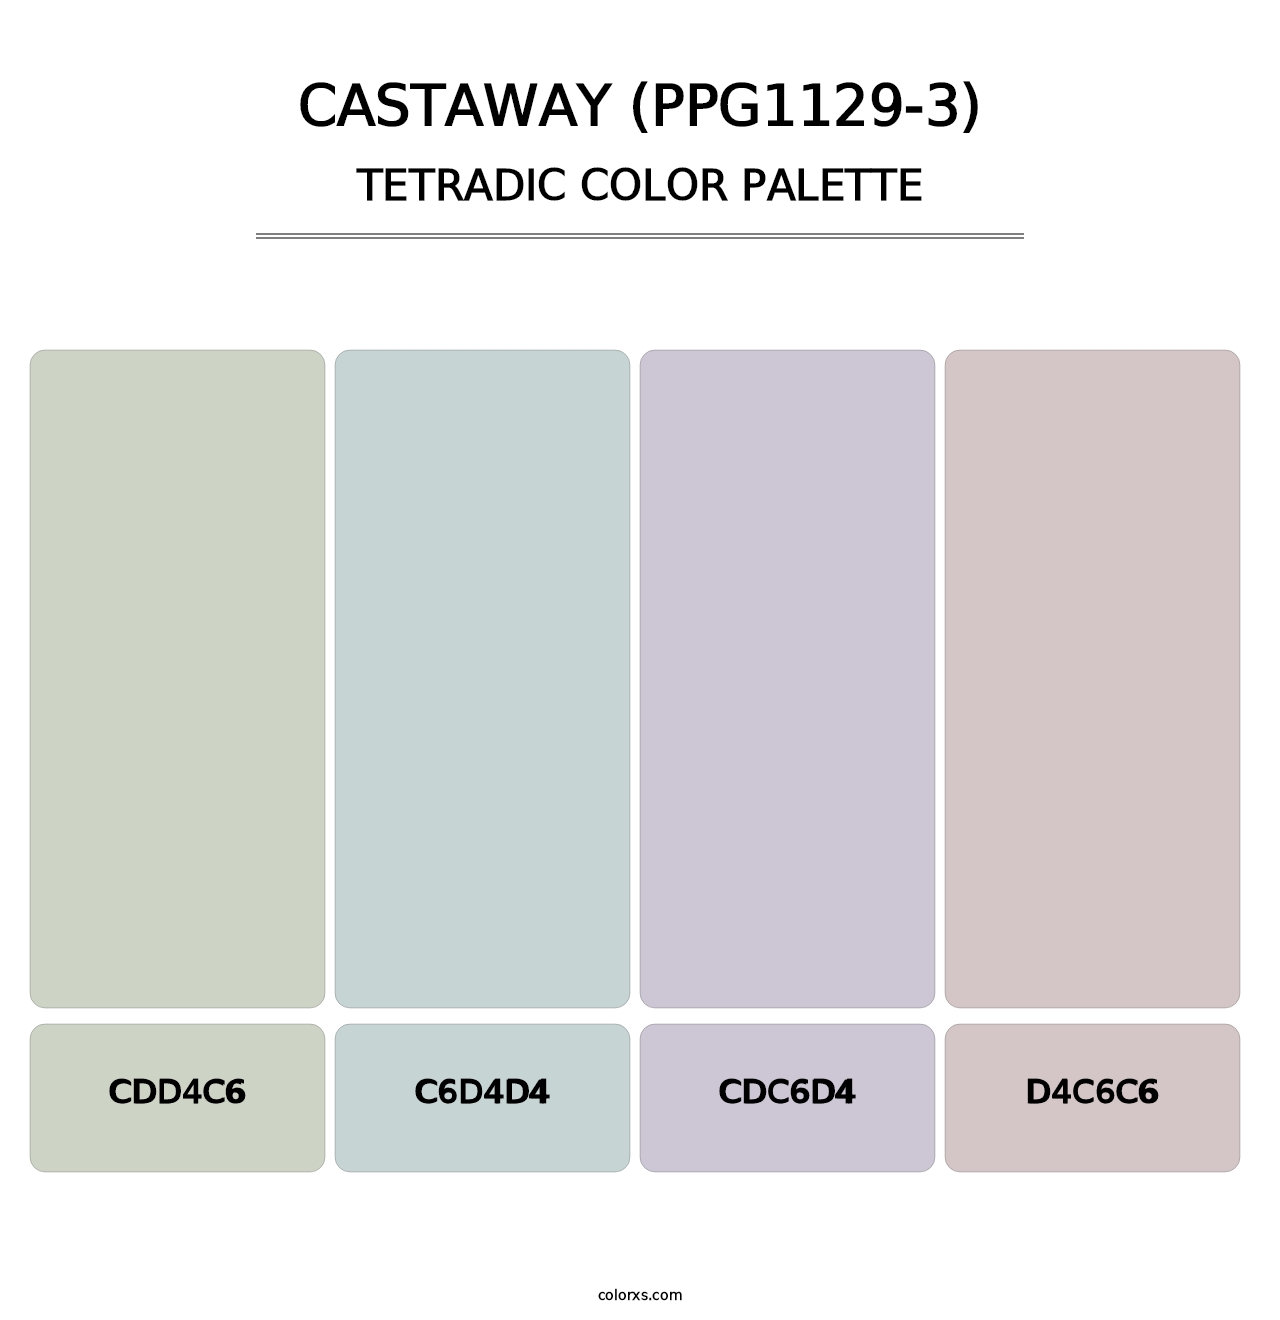 Castaway (PPG1129-3) - Tetradic Color Palette